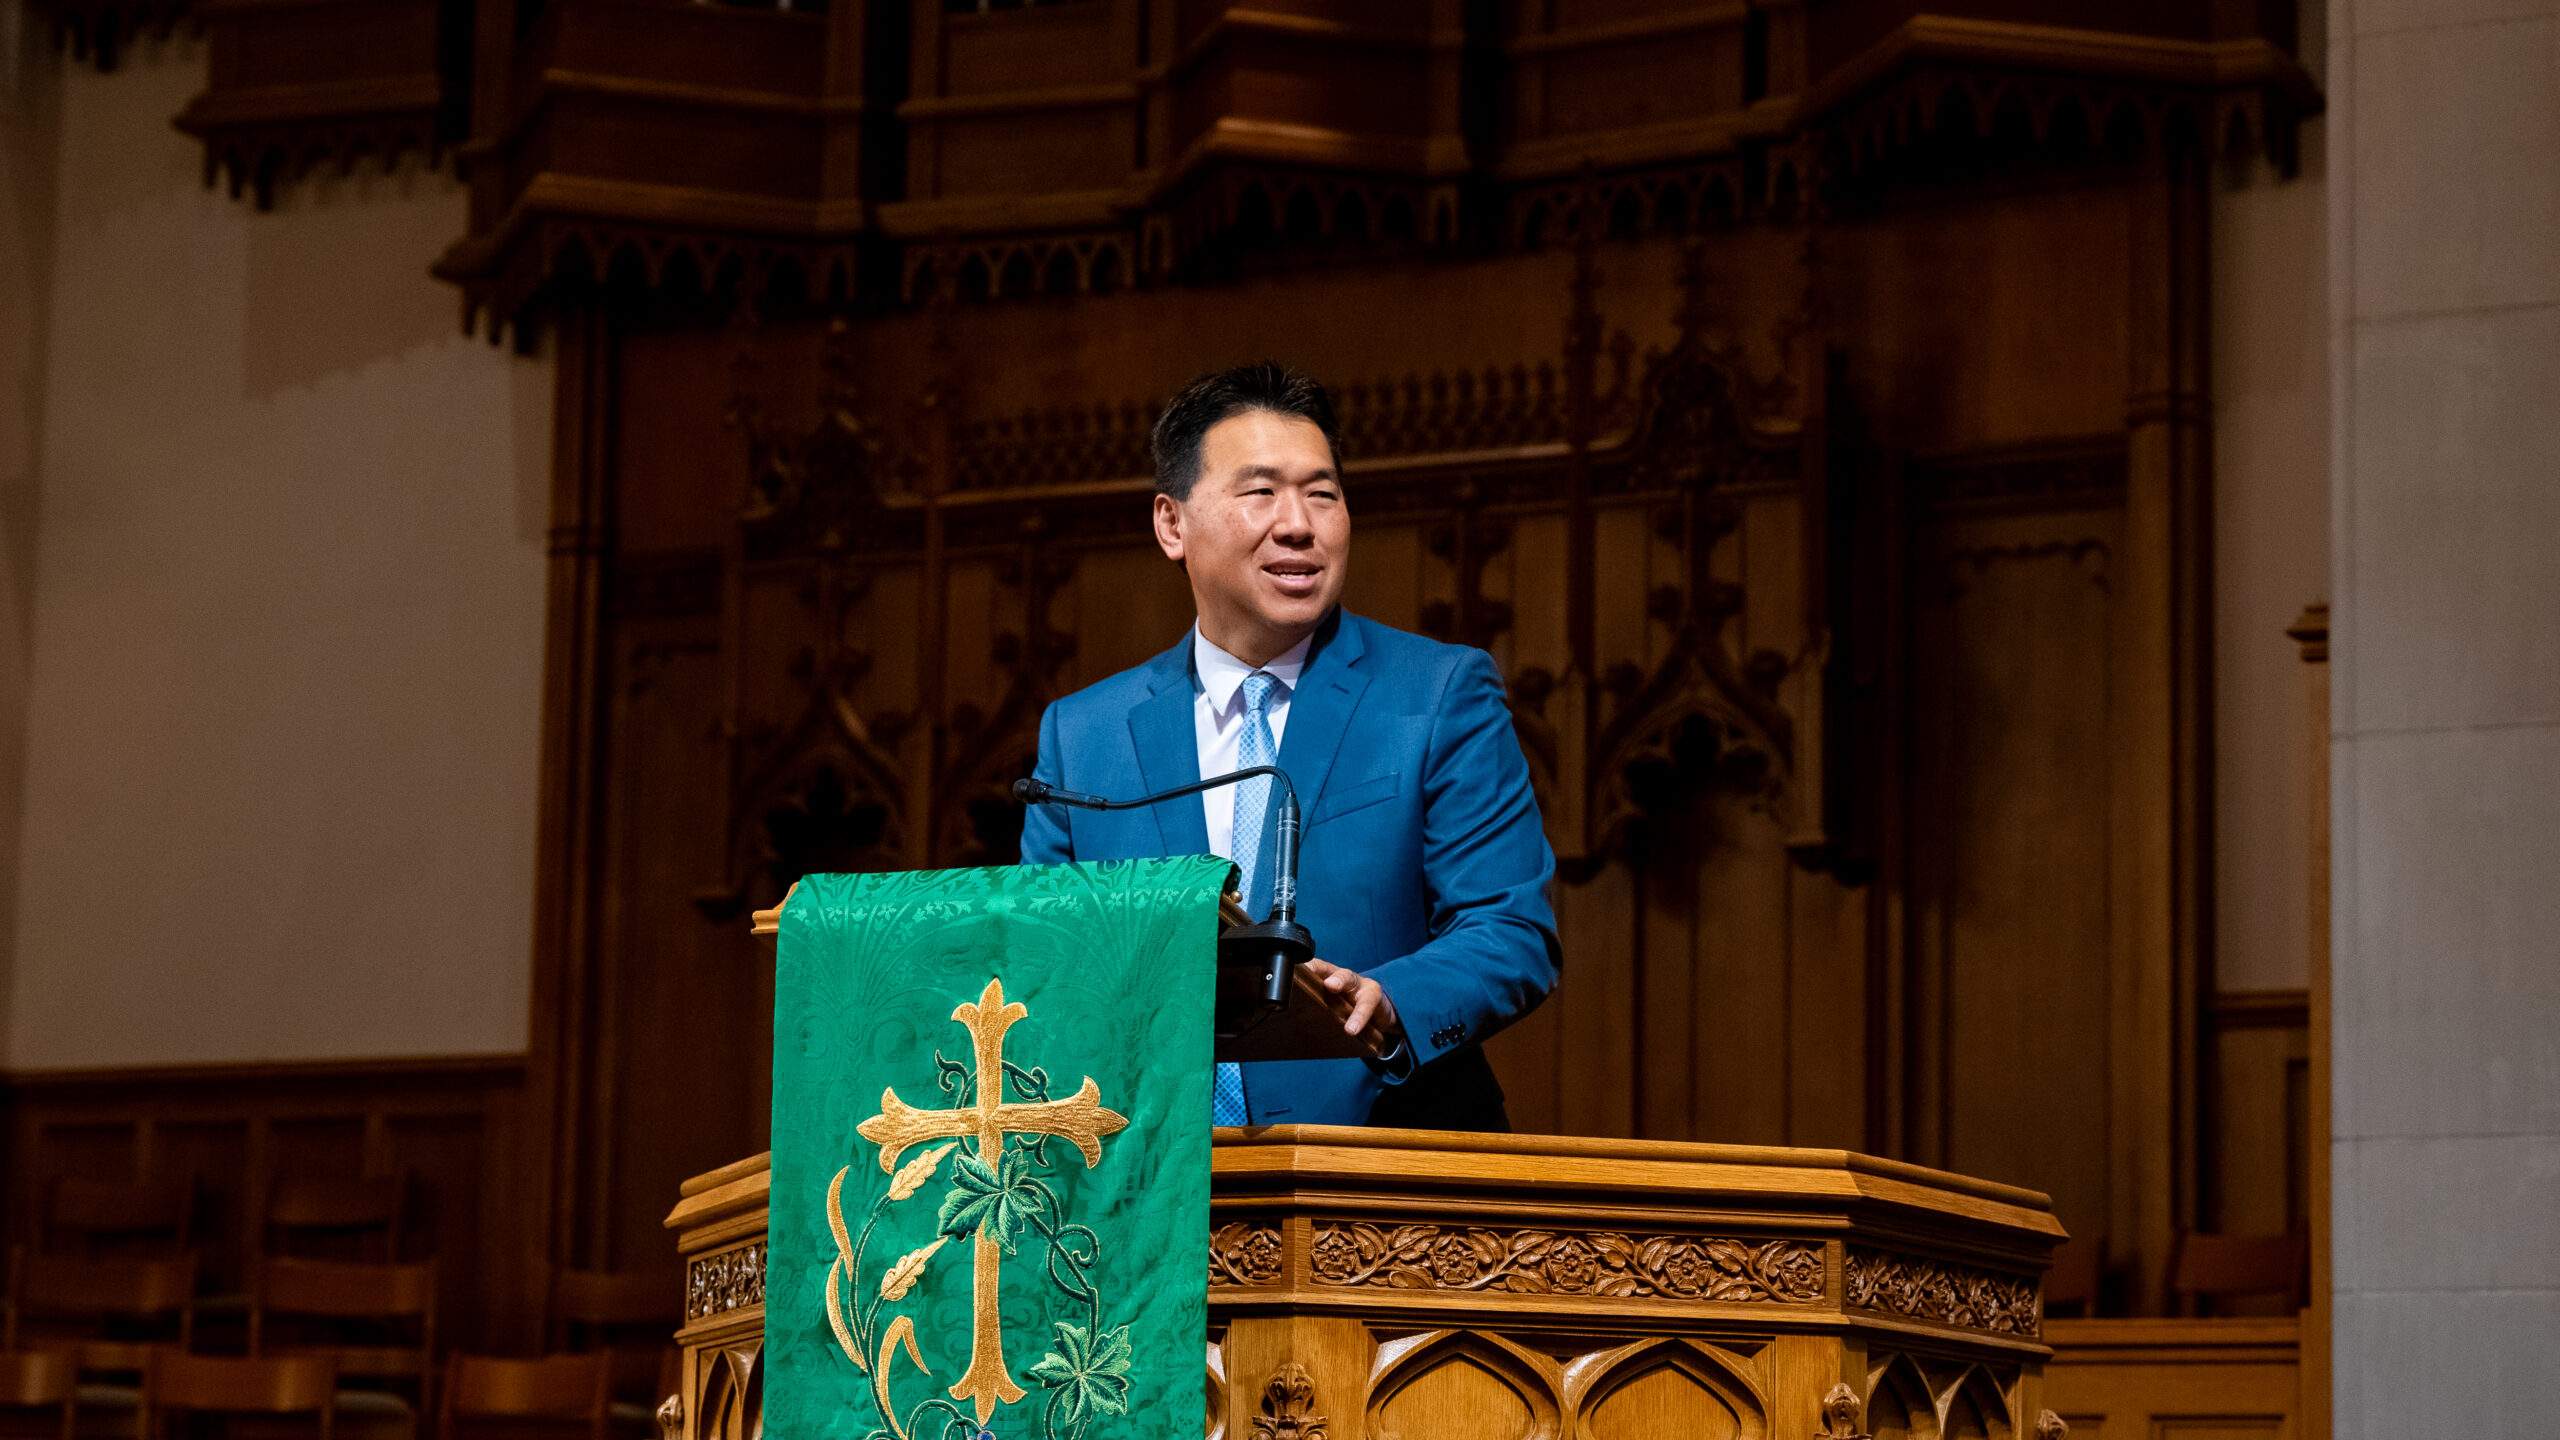 Executive Pastor Jay Lee